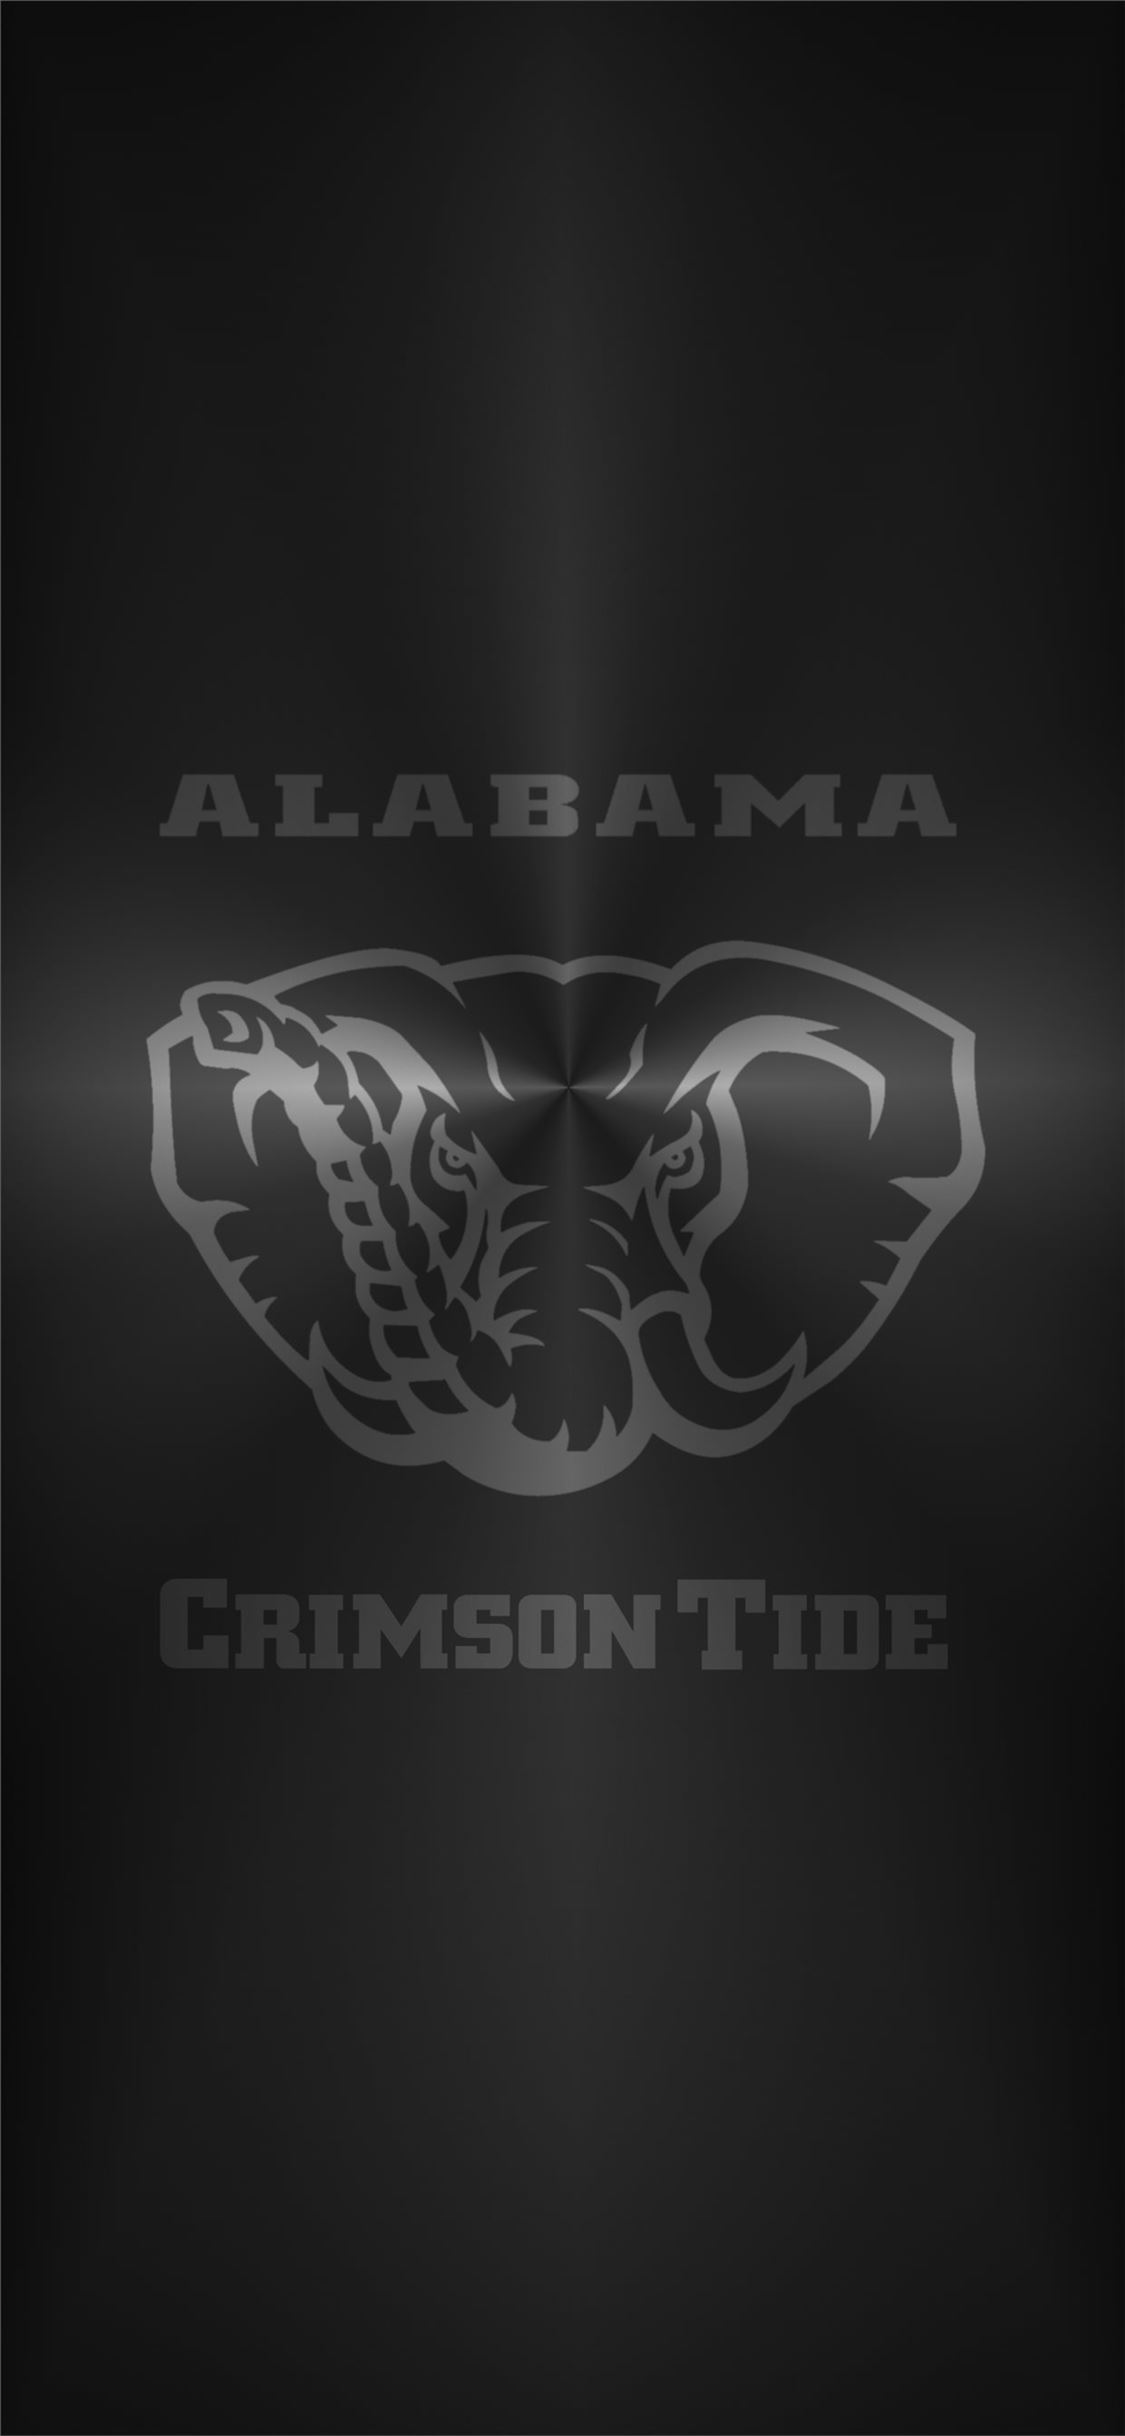 Alabama Crimson Tide Football logo